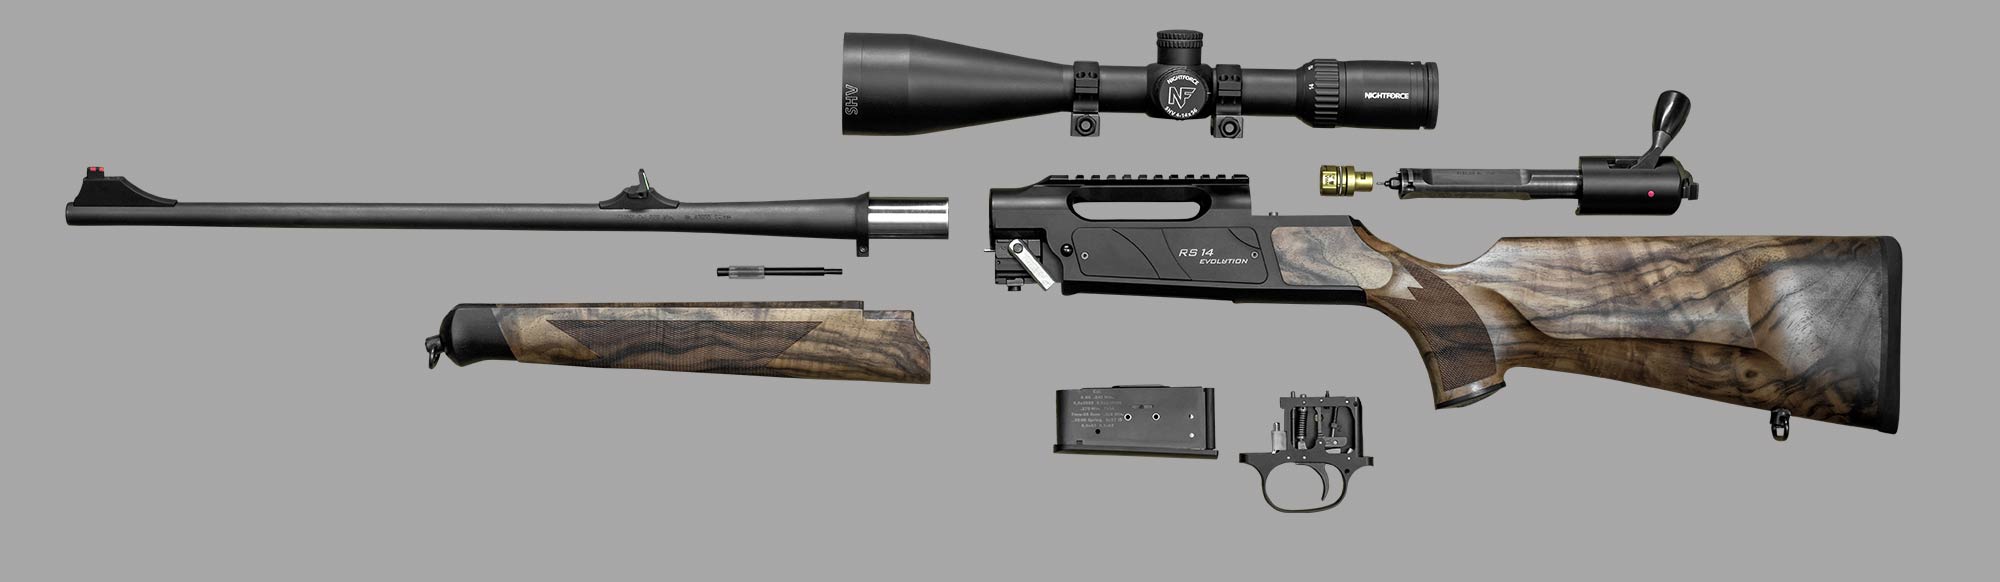 STRASSER RS 14 Evolution hunting rifle